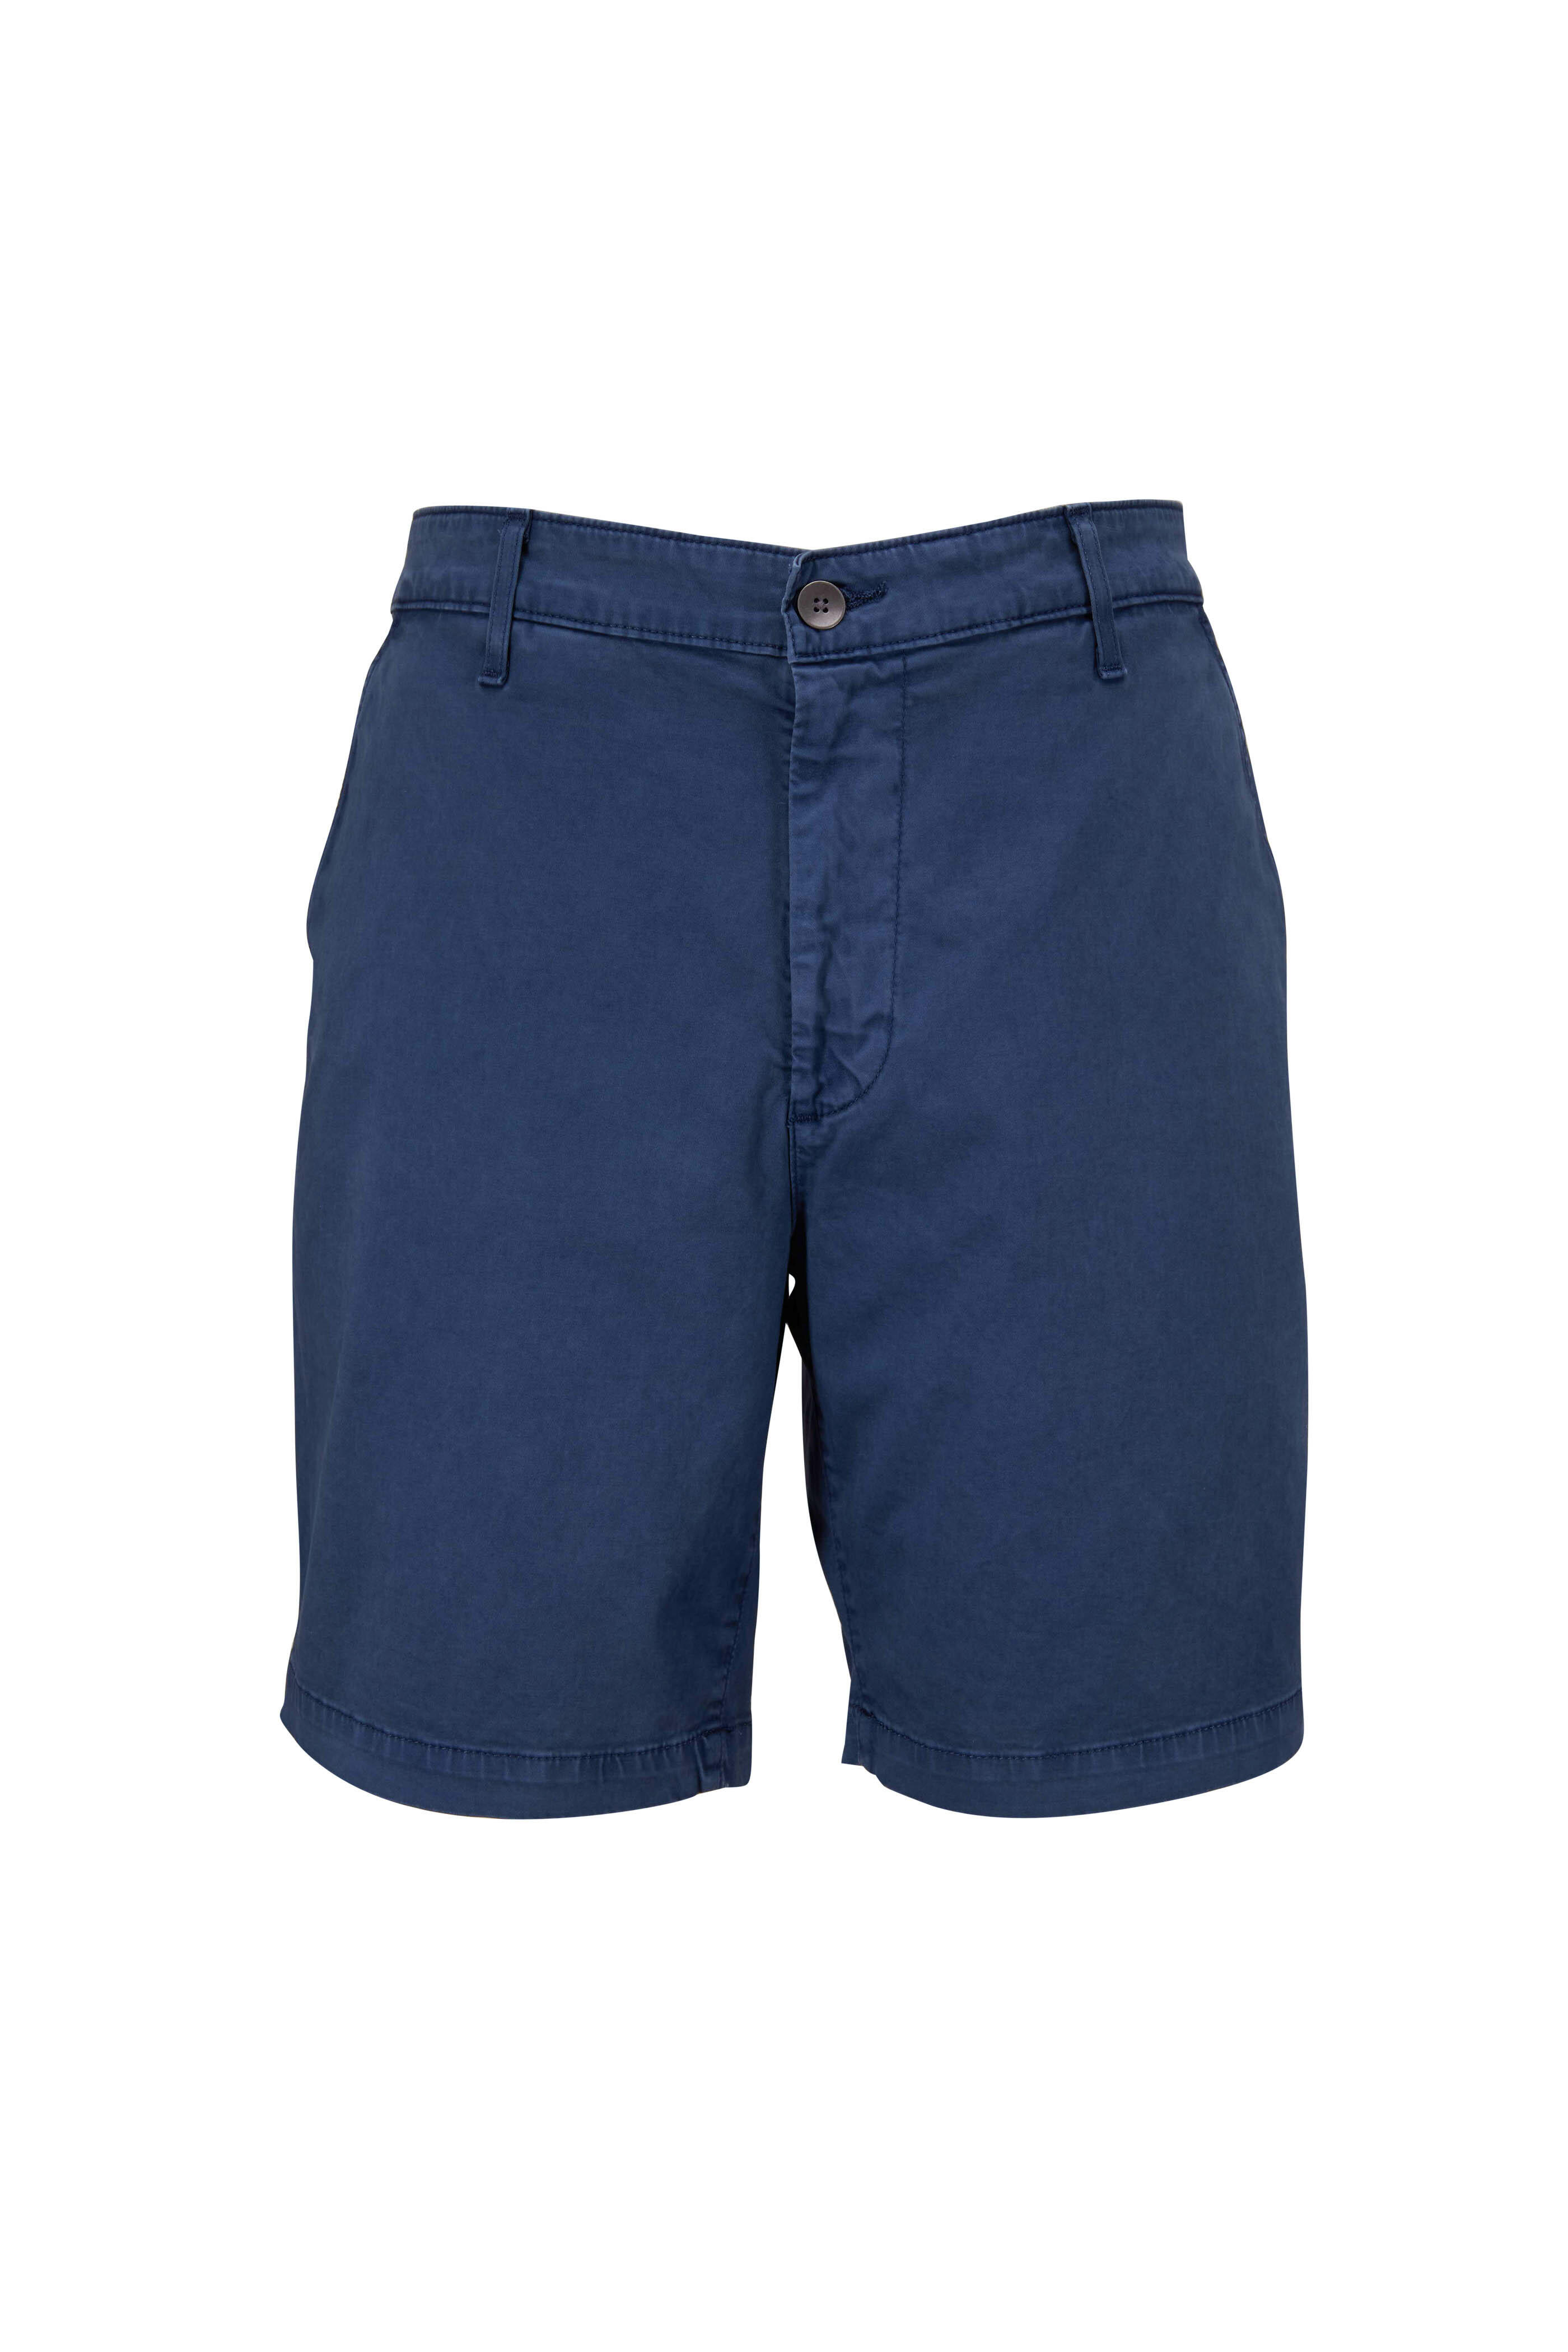 AG - Wanderer Rio Blue Slim Fit Short